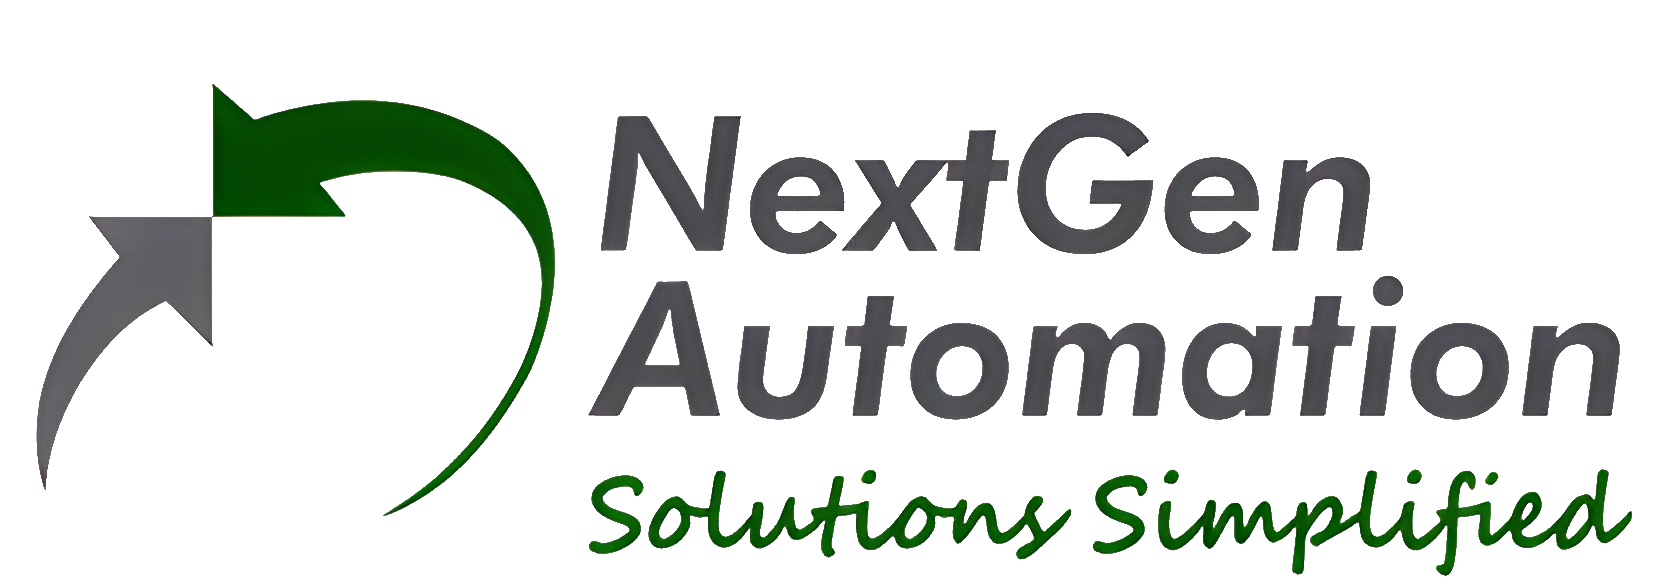 NextGen Automation